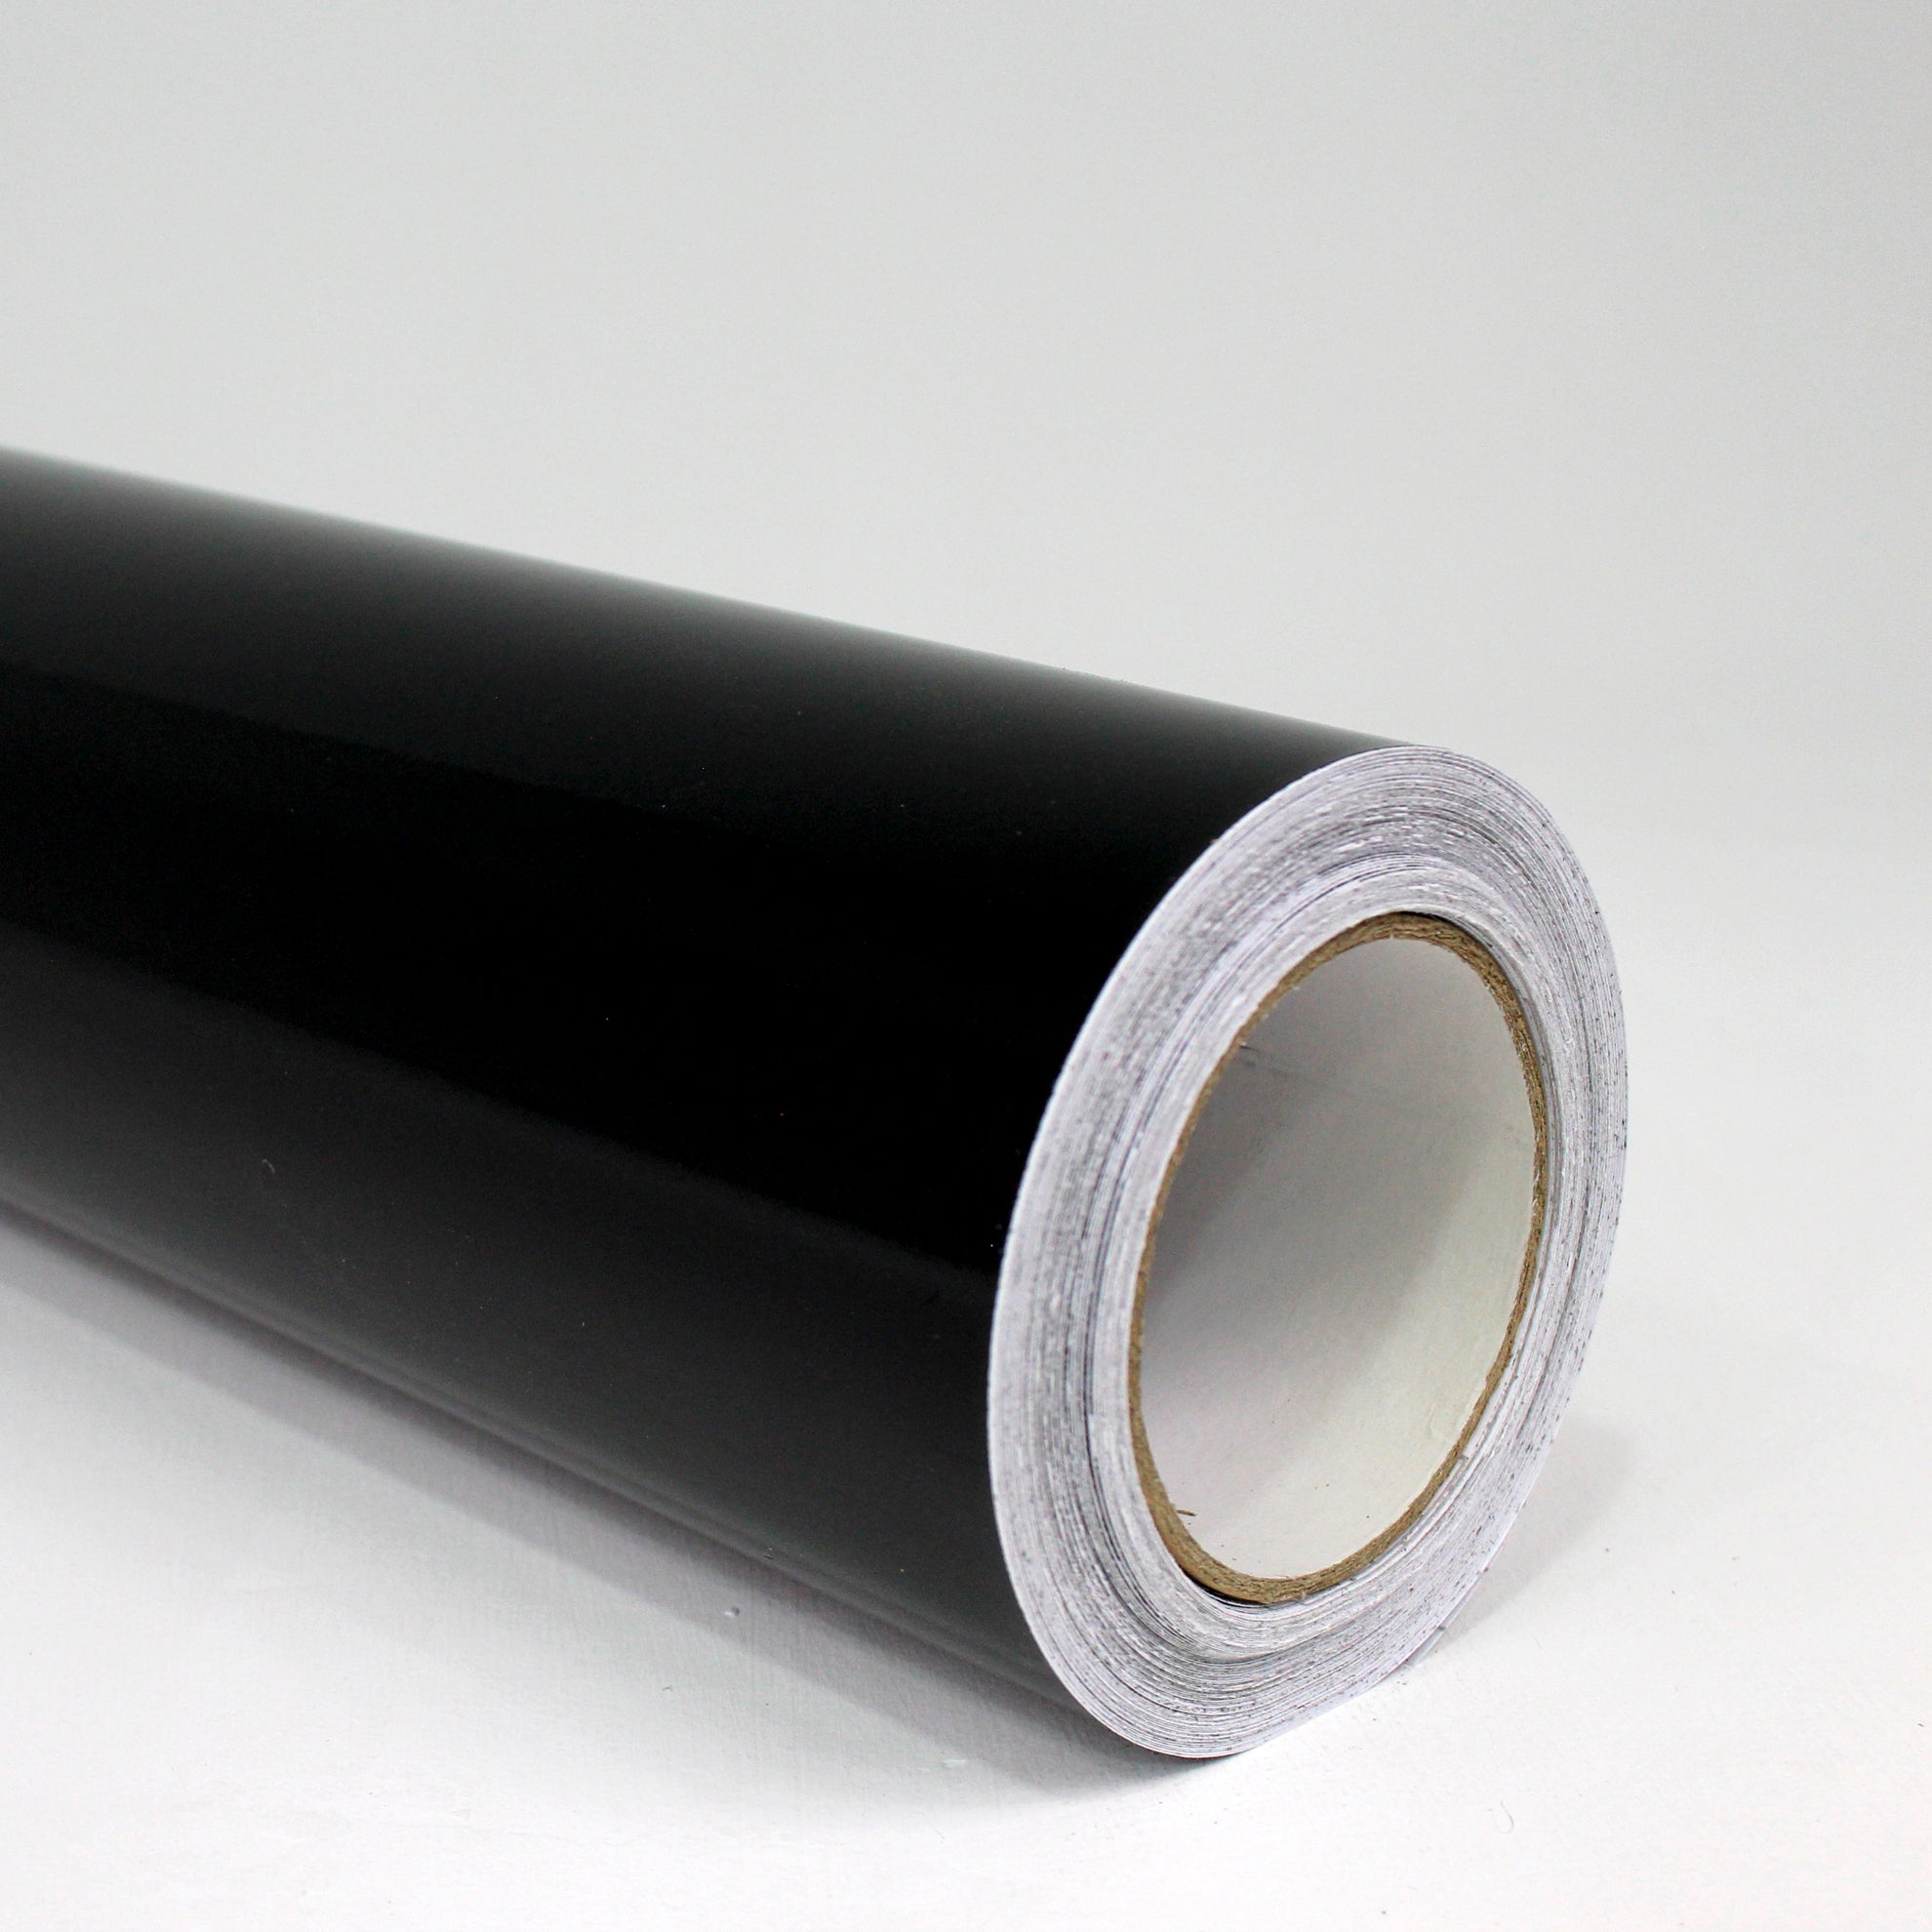 Vinilo Decorativo Autoadhesivo Brillante Rollo de 30cm de ancho por metro  lineal - Color: Negro Brillante